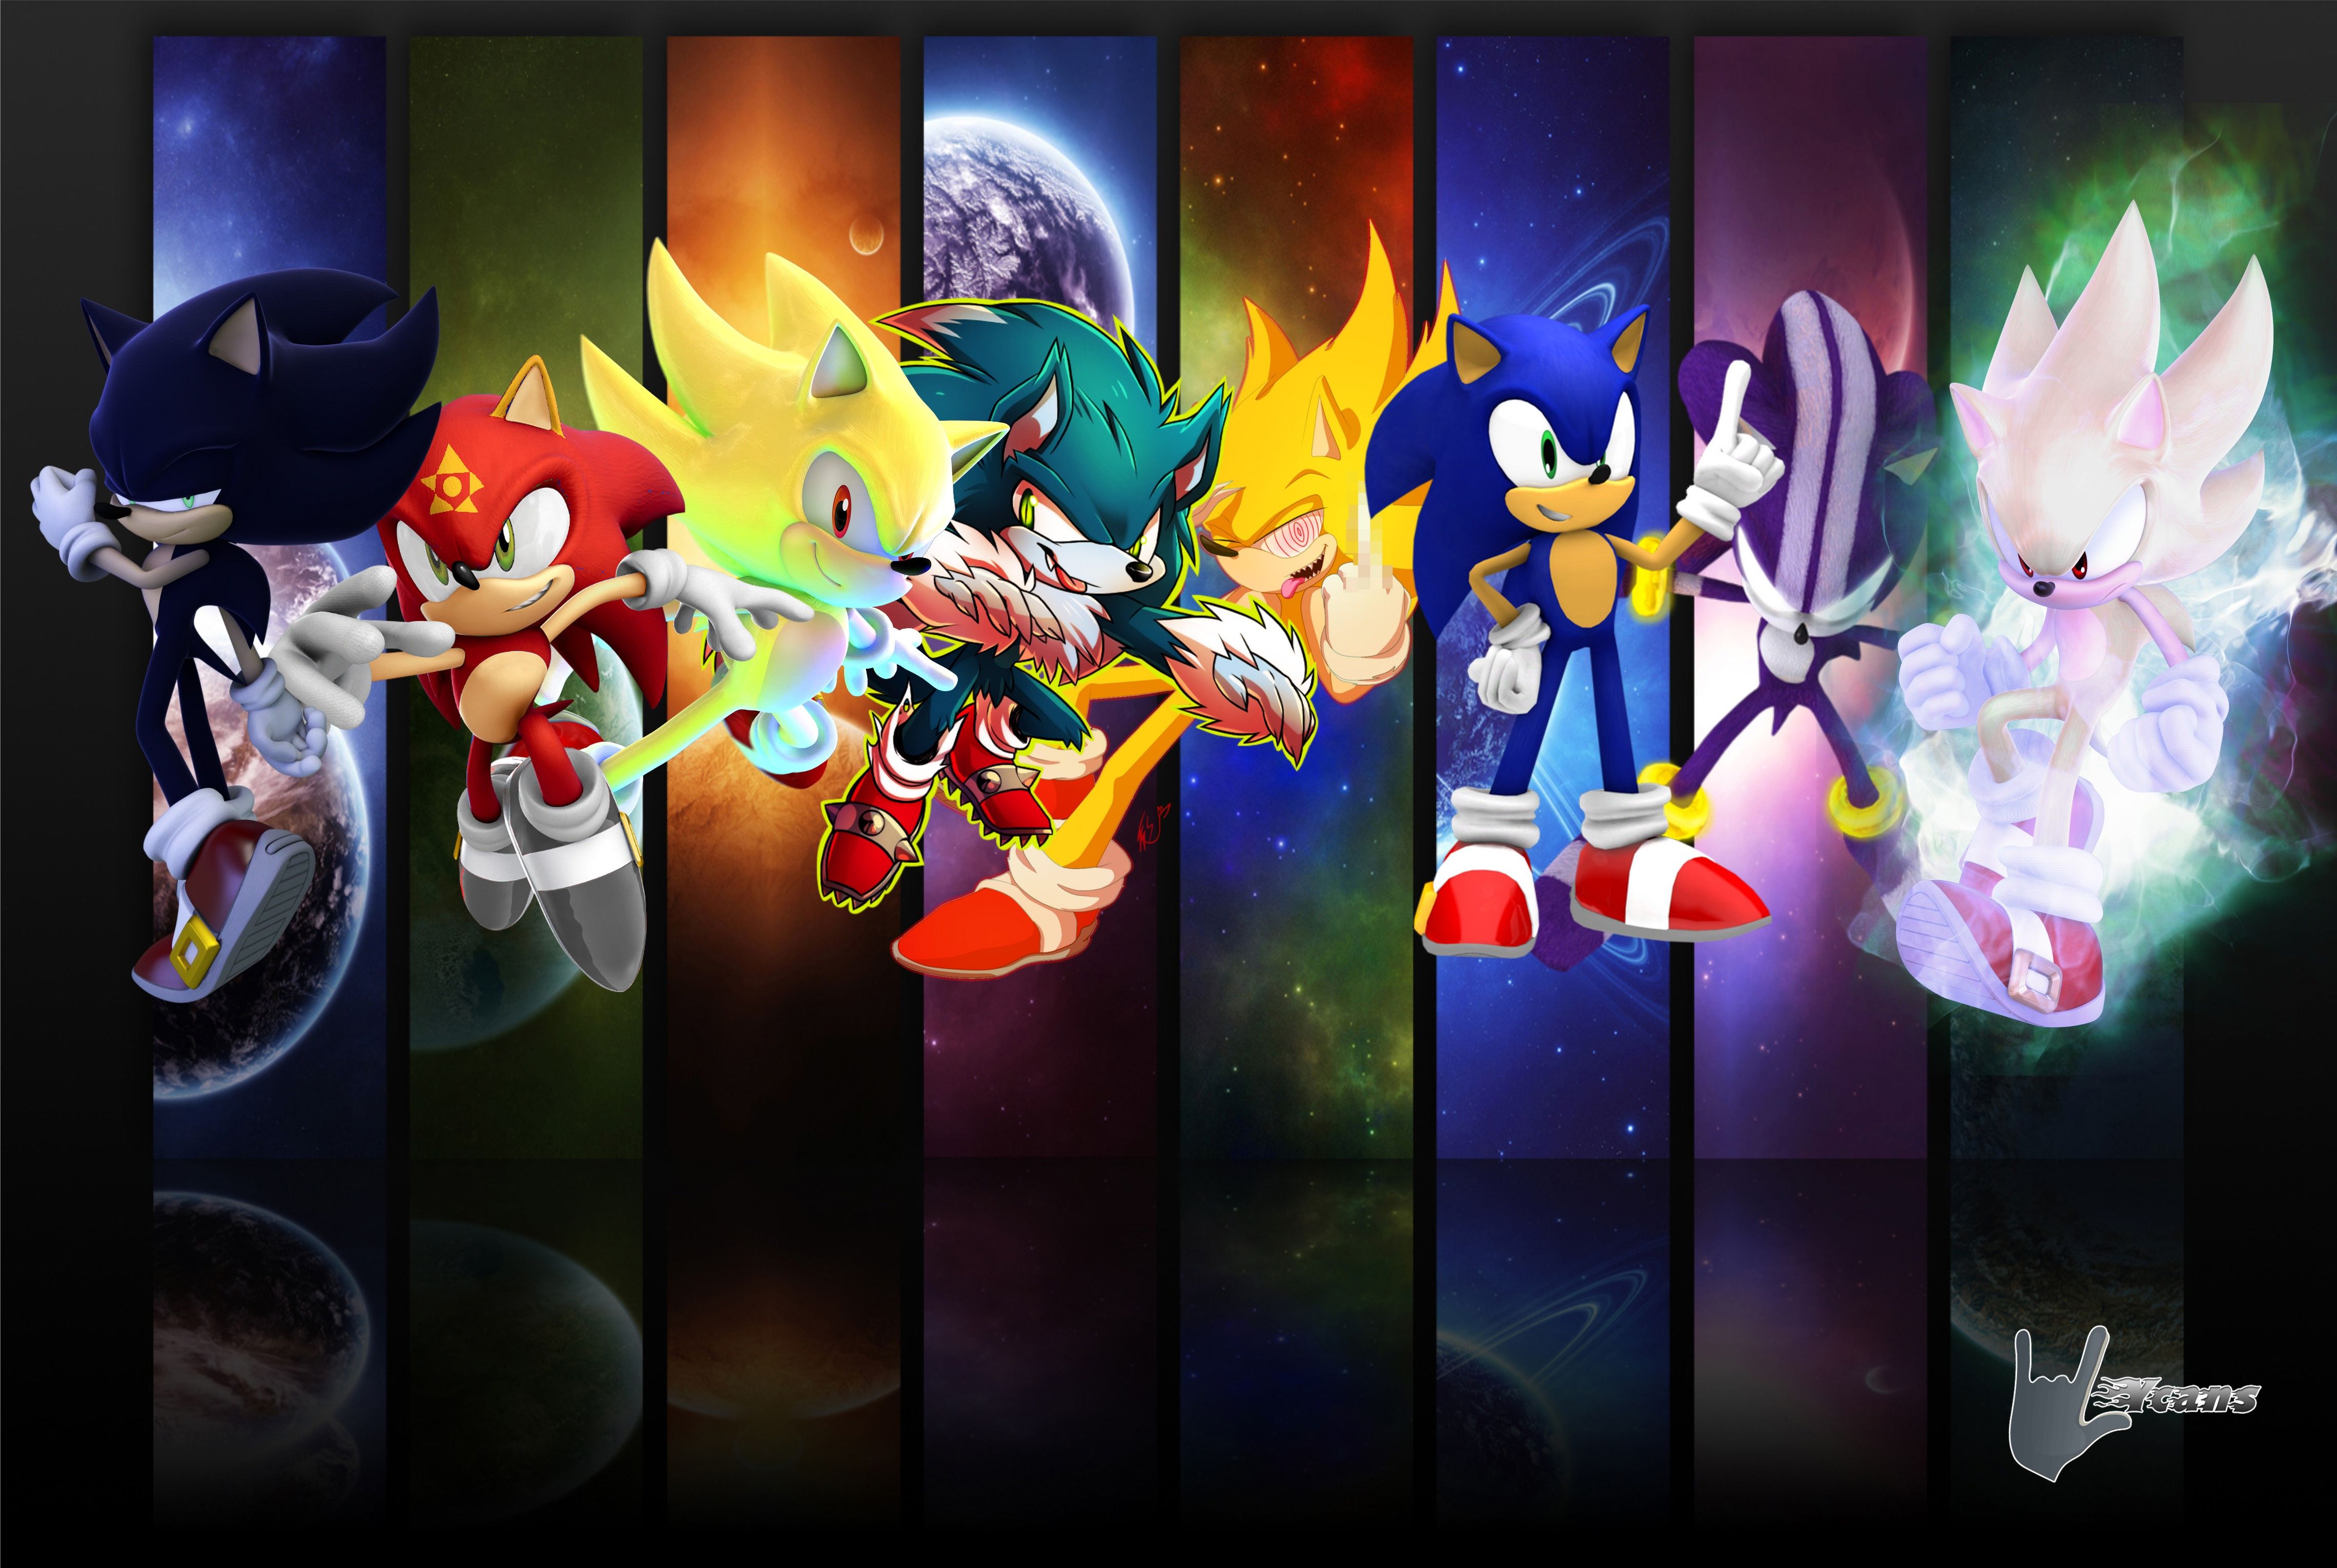 Sonic the Werehog Wallpaper. Sonic the Werehog Wallpaper, Sonic Werehog Wallpaper and Sonic Unleashed Werehog Wallpaper